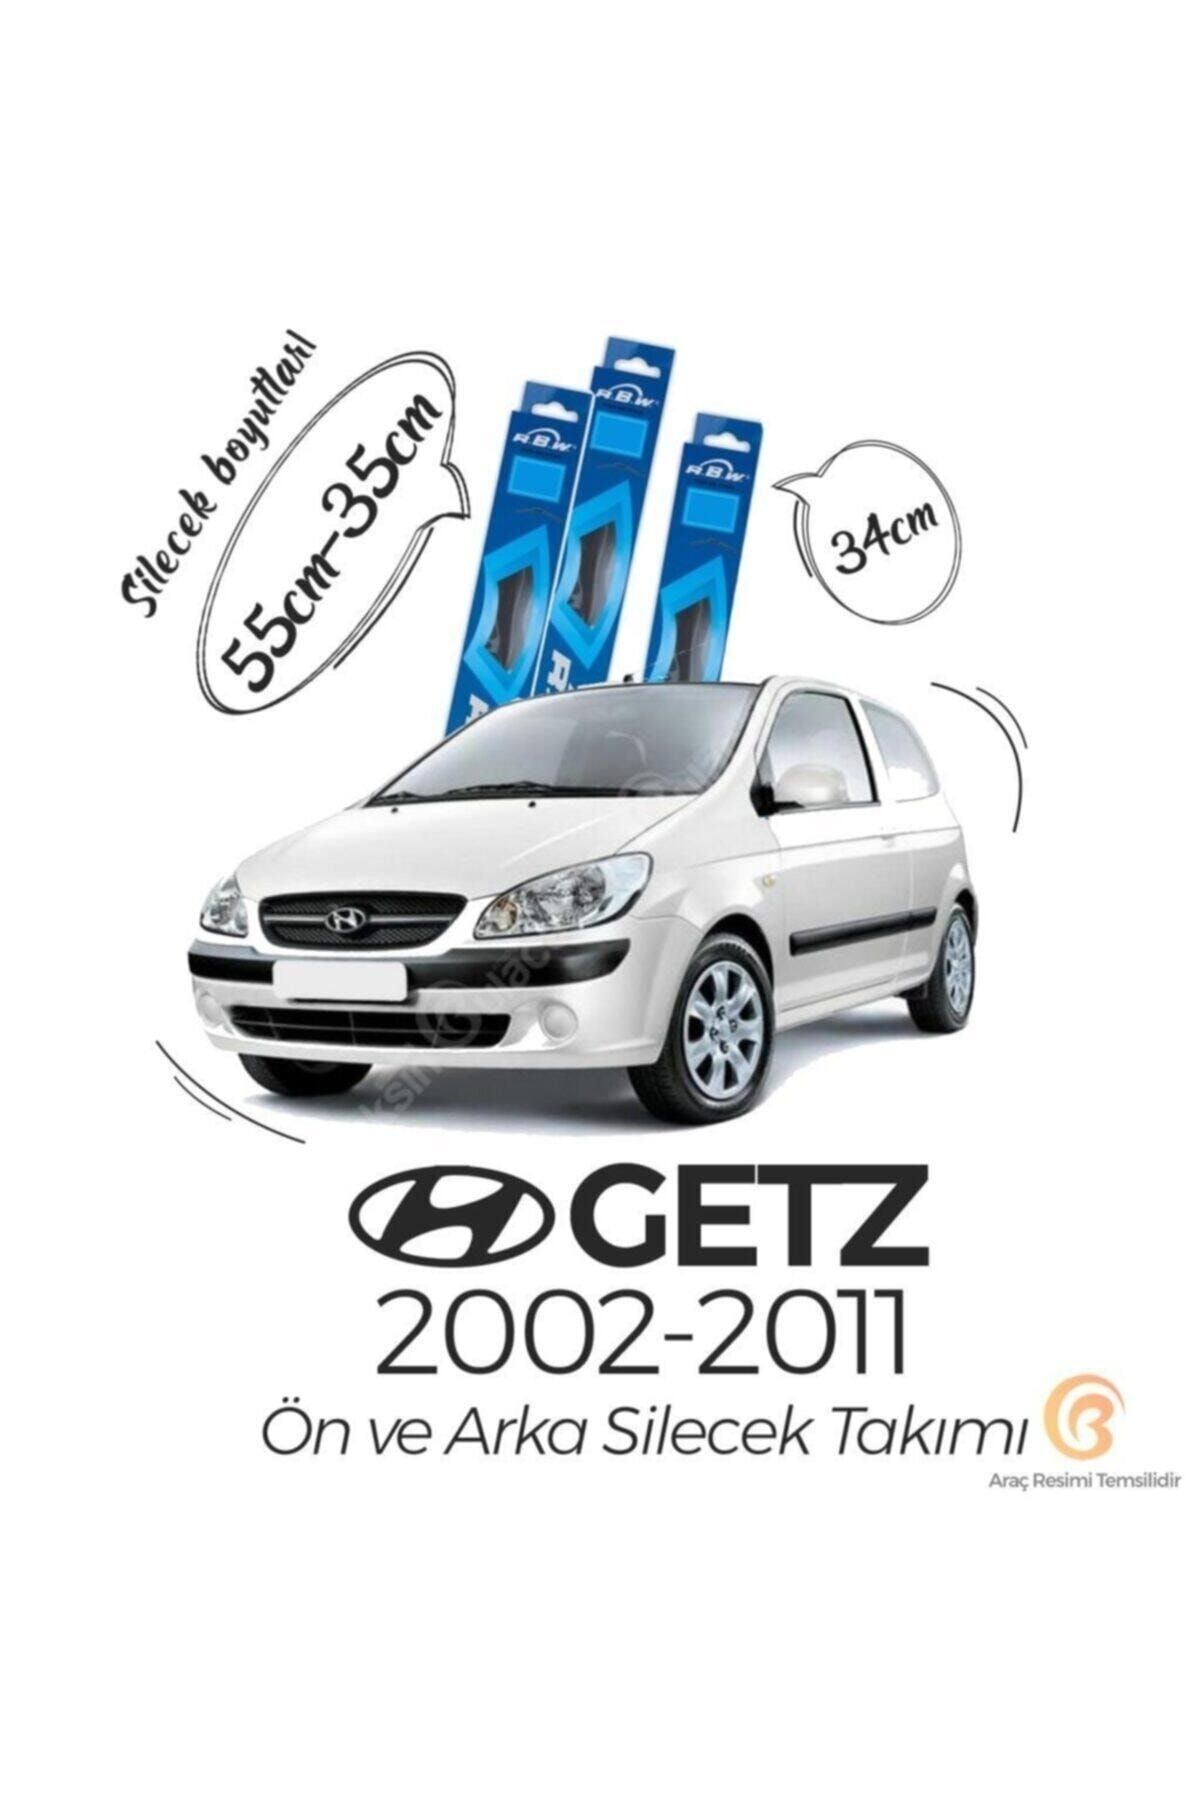 Гетц арка. Hyundai Getz 2002. Hyundai Getz logo.